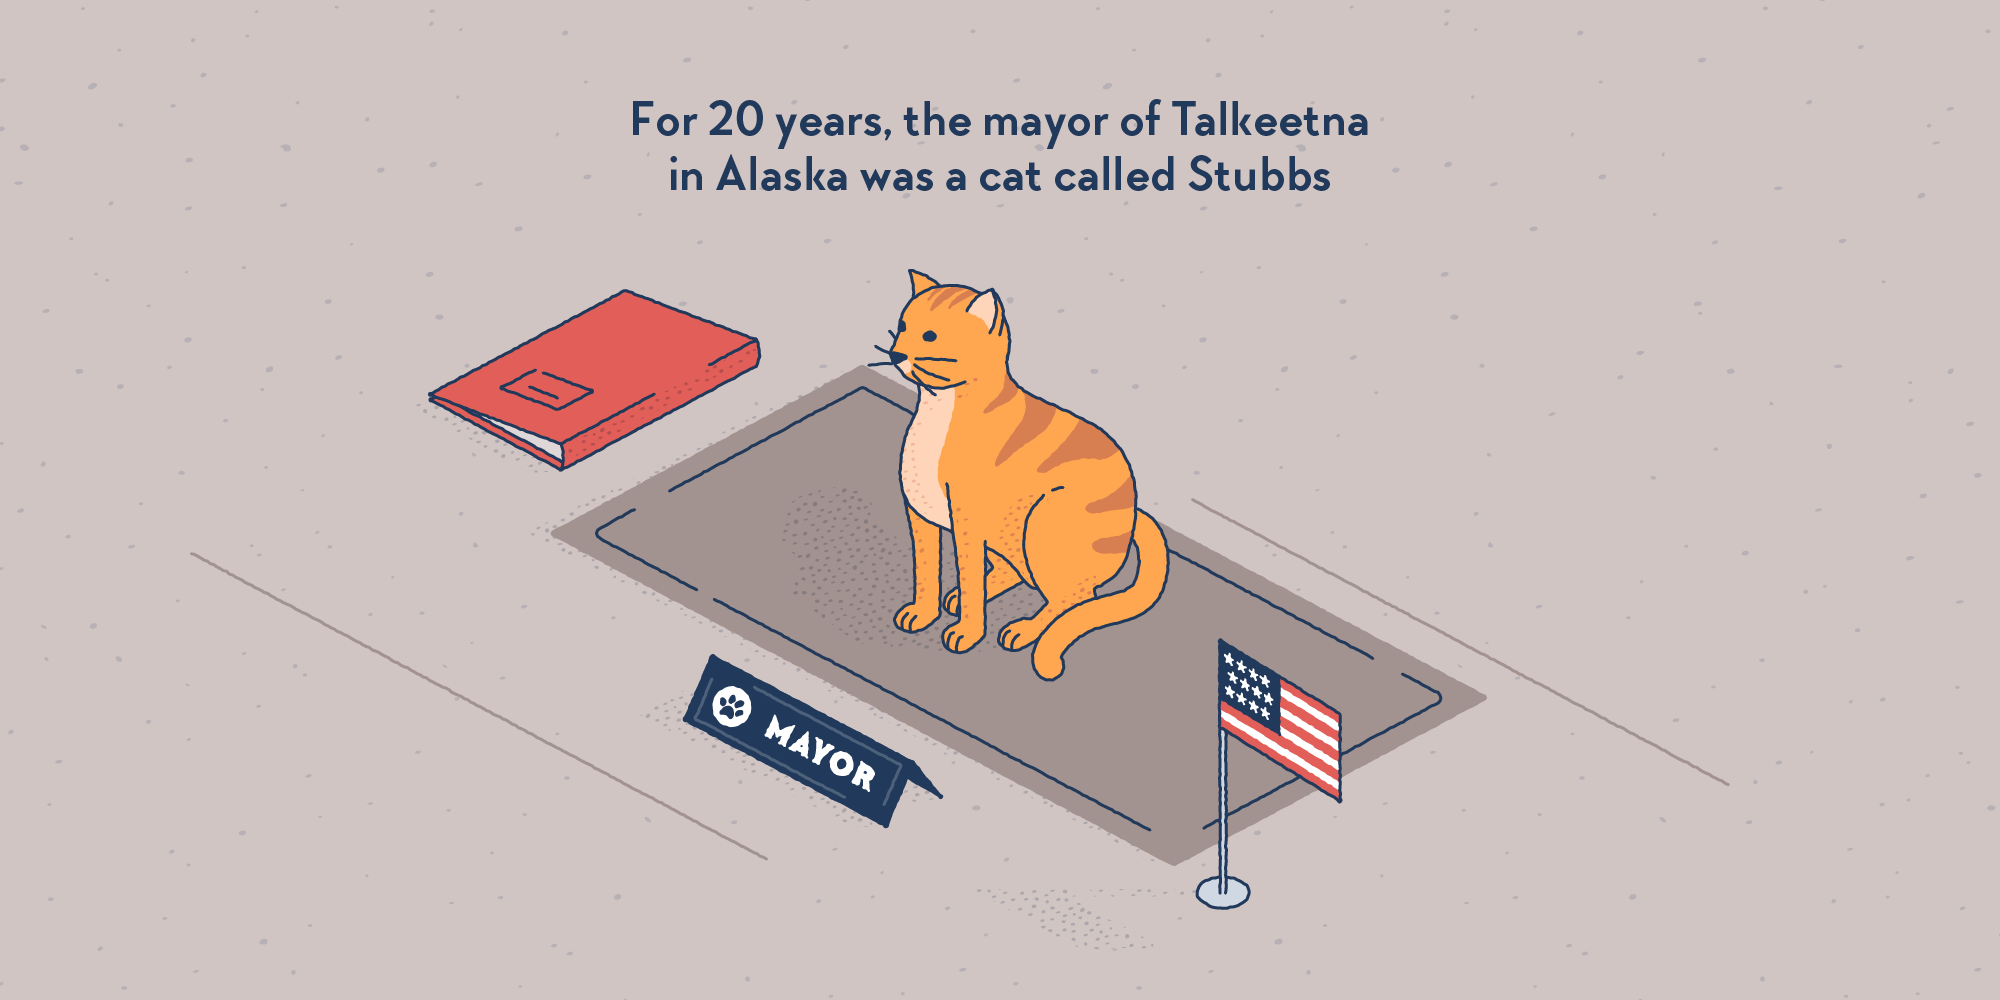 A cat sitting on a mayor’s desk.